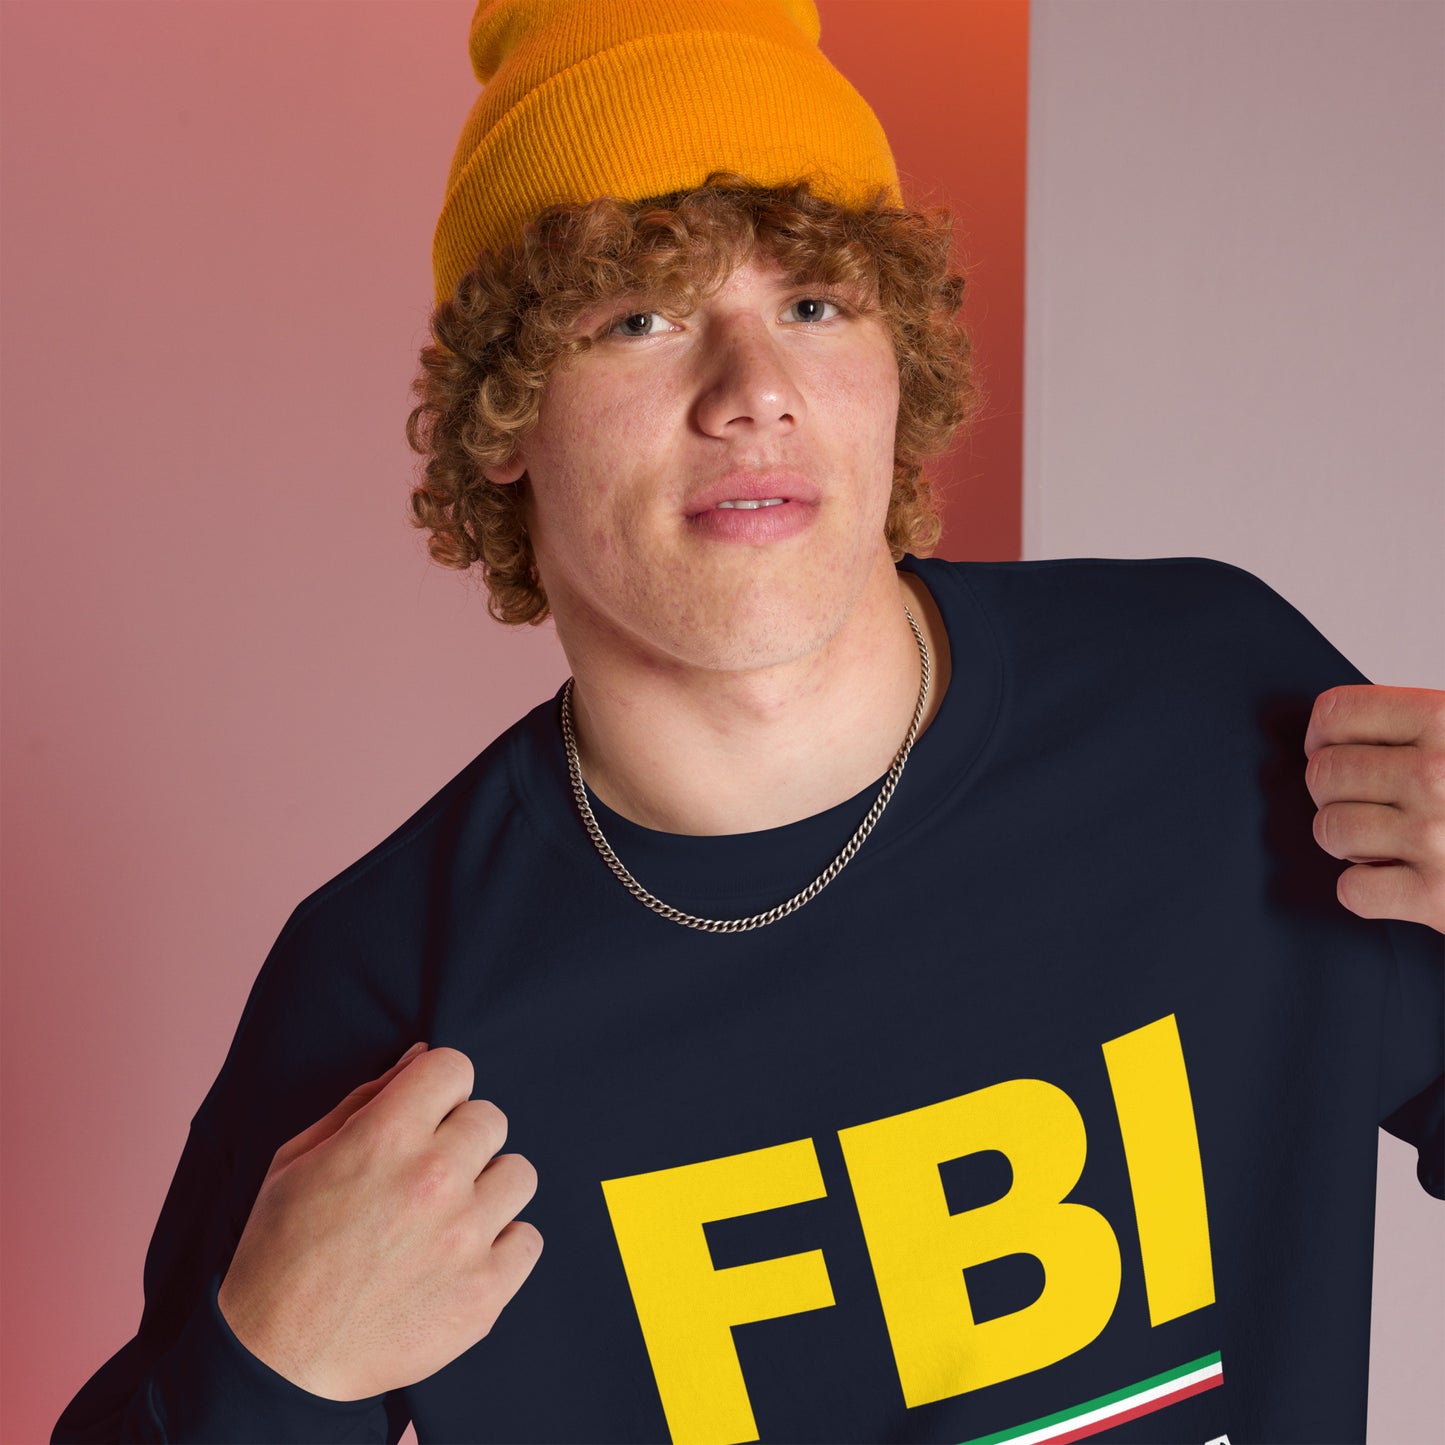 FBI Unisex Sweatshirt